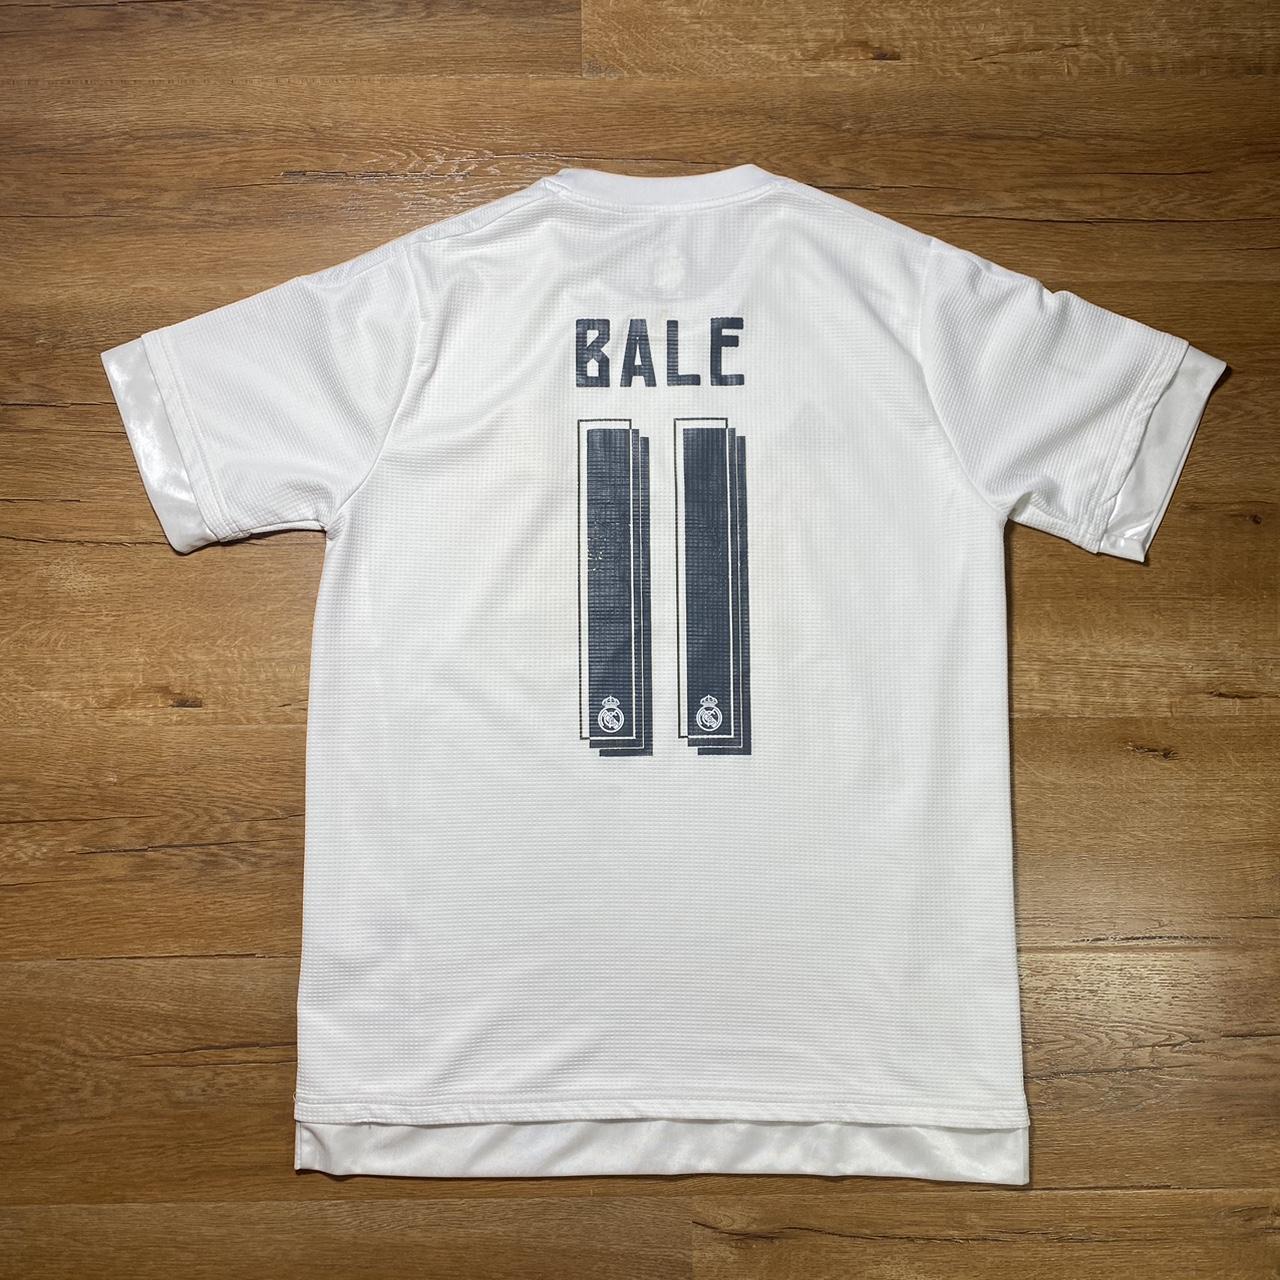 Real Madrid Soccar Jersey Number 11 Bale size s... - Depop